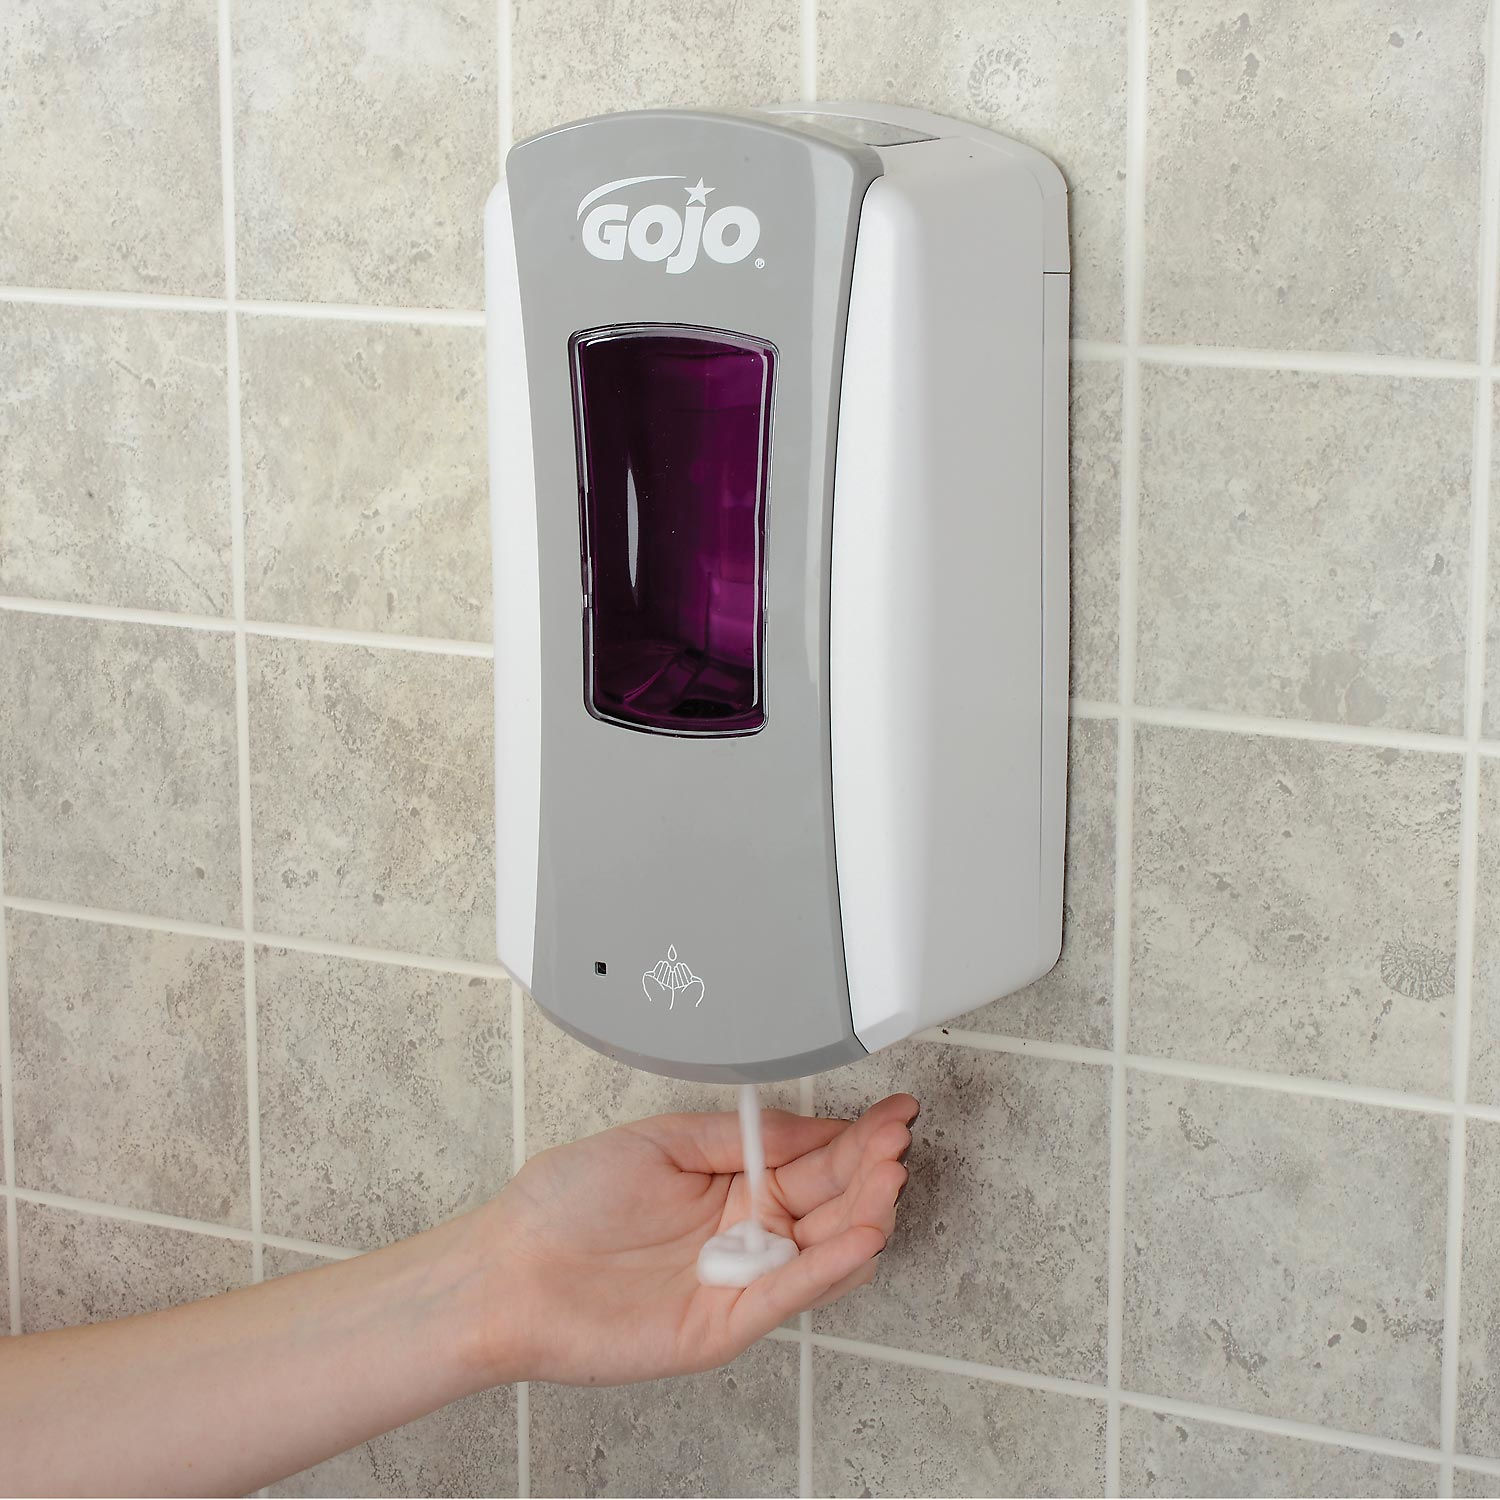 GOJO Hand Soap Dispenser - LTX Gray/White 1200mL 73852026559 | eBay